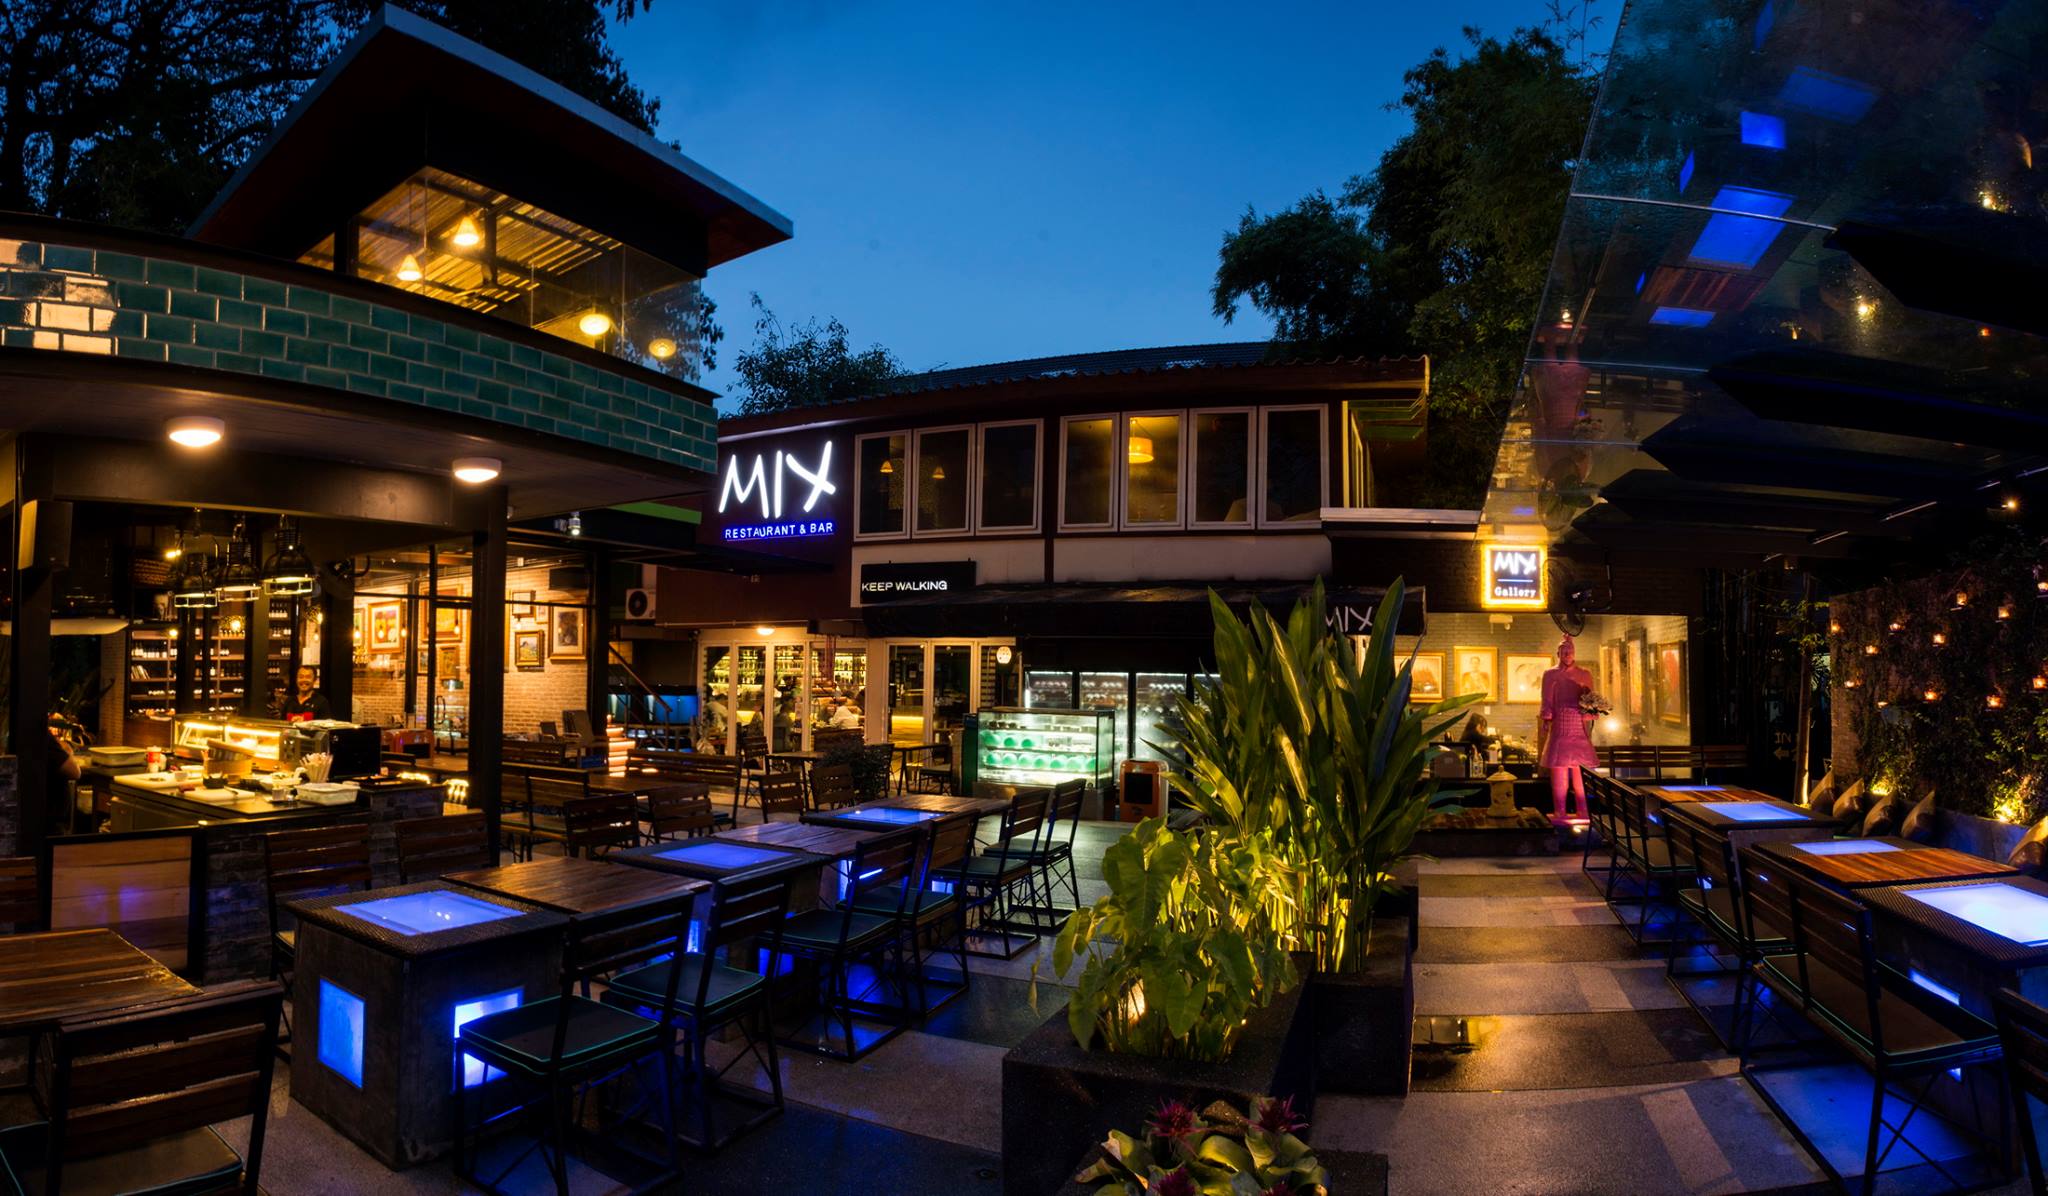 Mix Restaurant & Bar at Chiang Mai (มิกซ์ เรสทัวรอง แอนด์ บาร์ ) : Chiang Mai (เชียงใหม่)